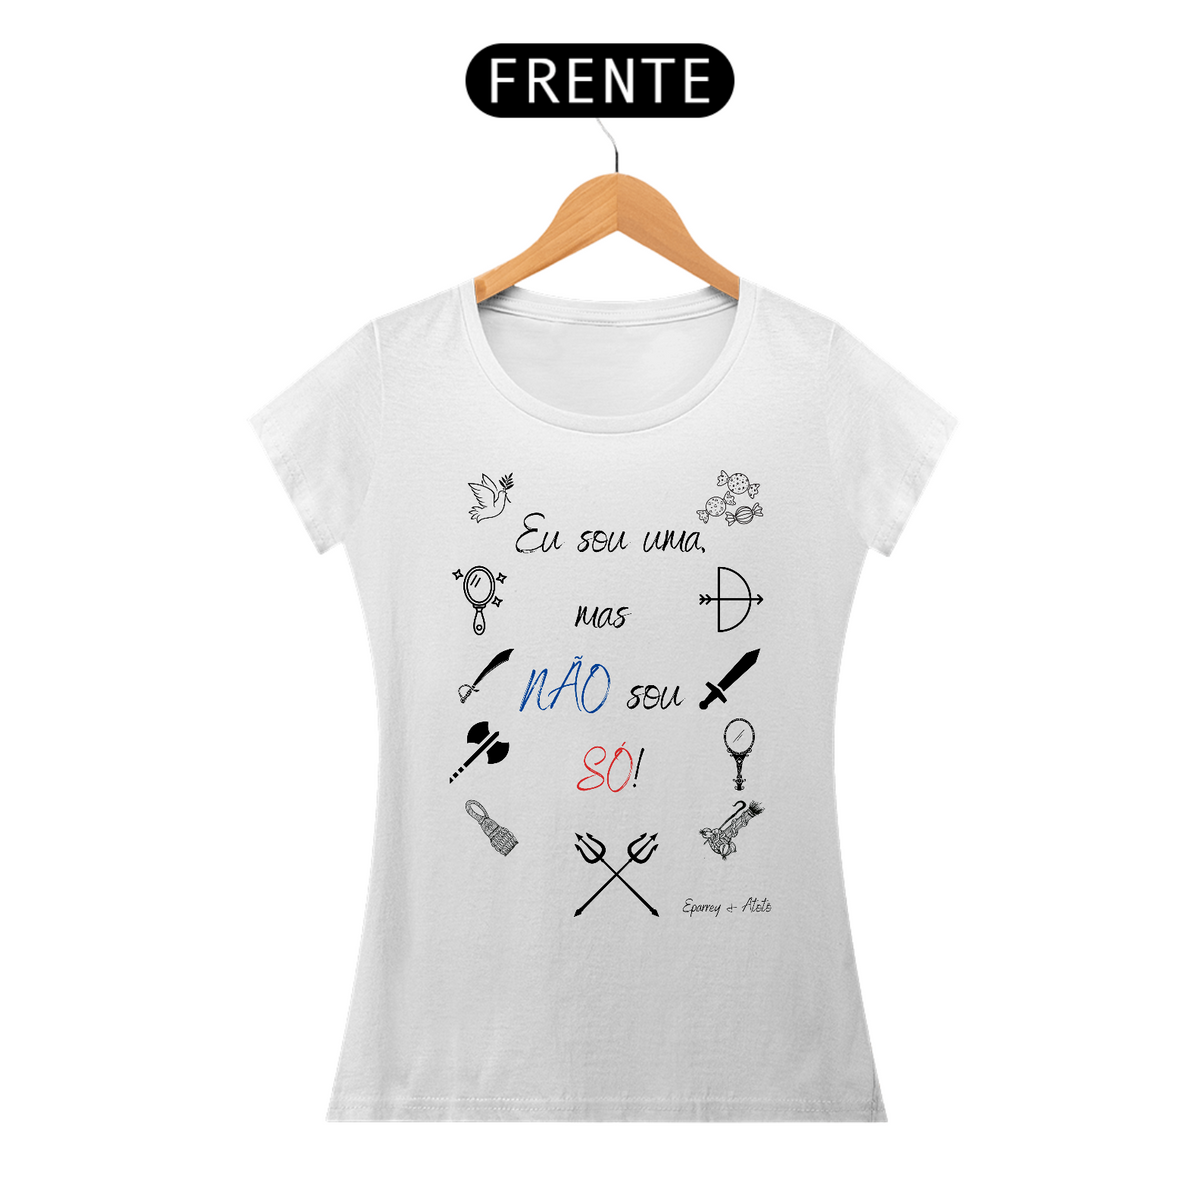 Nome do produto: Camiseta Feminina Frases